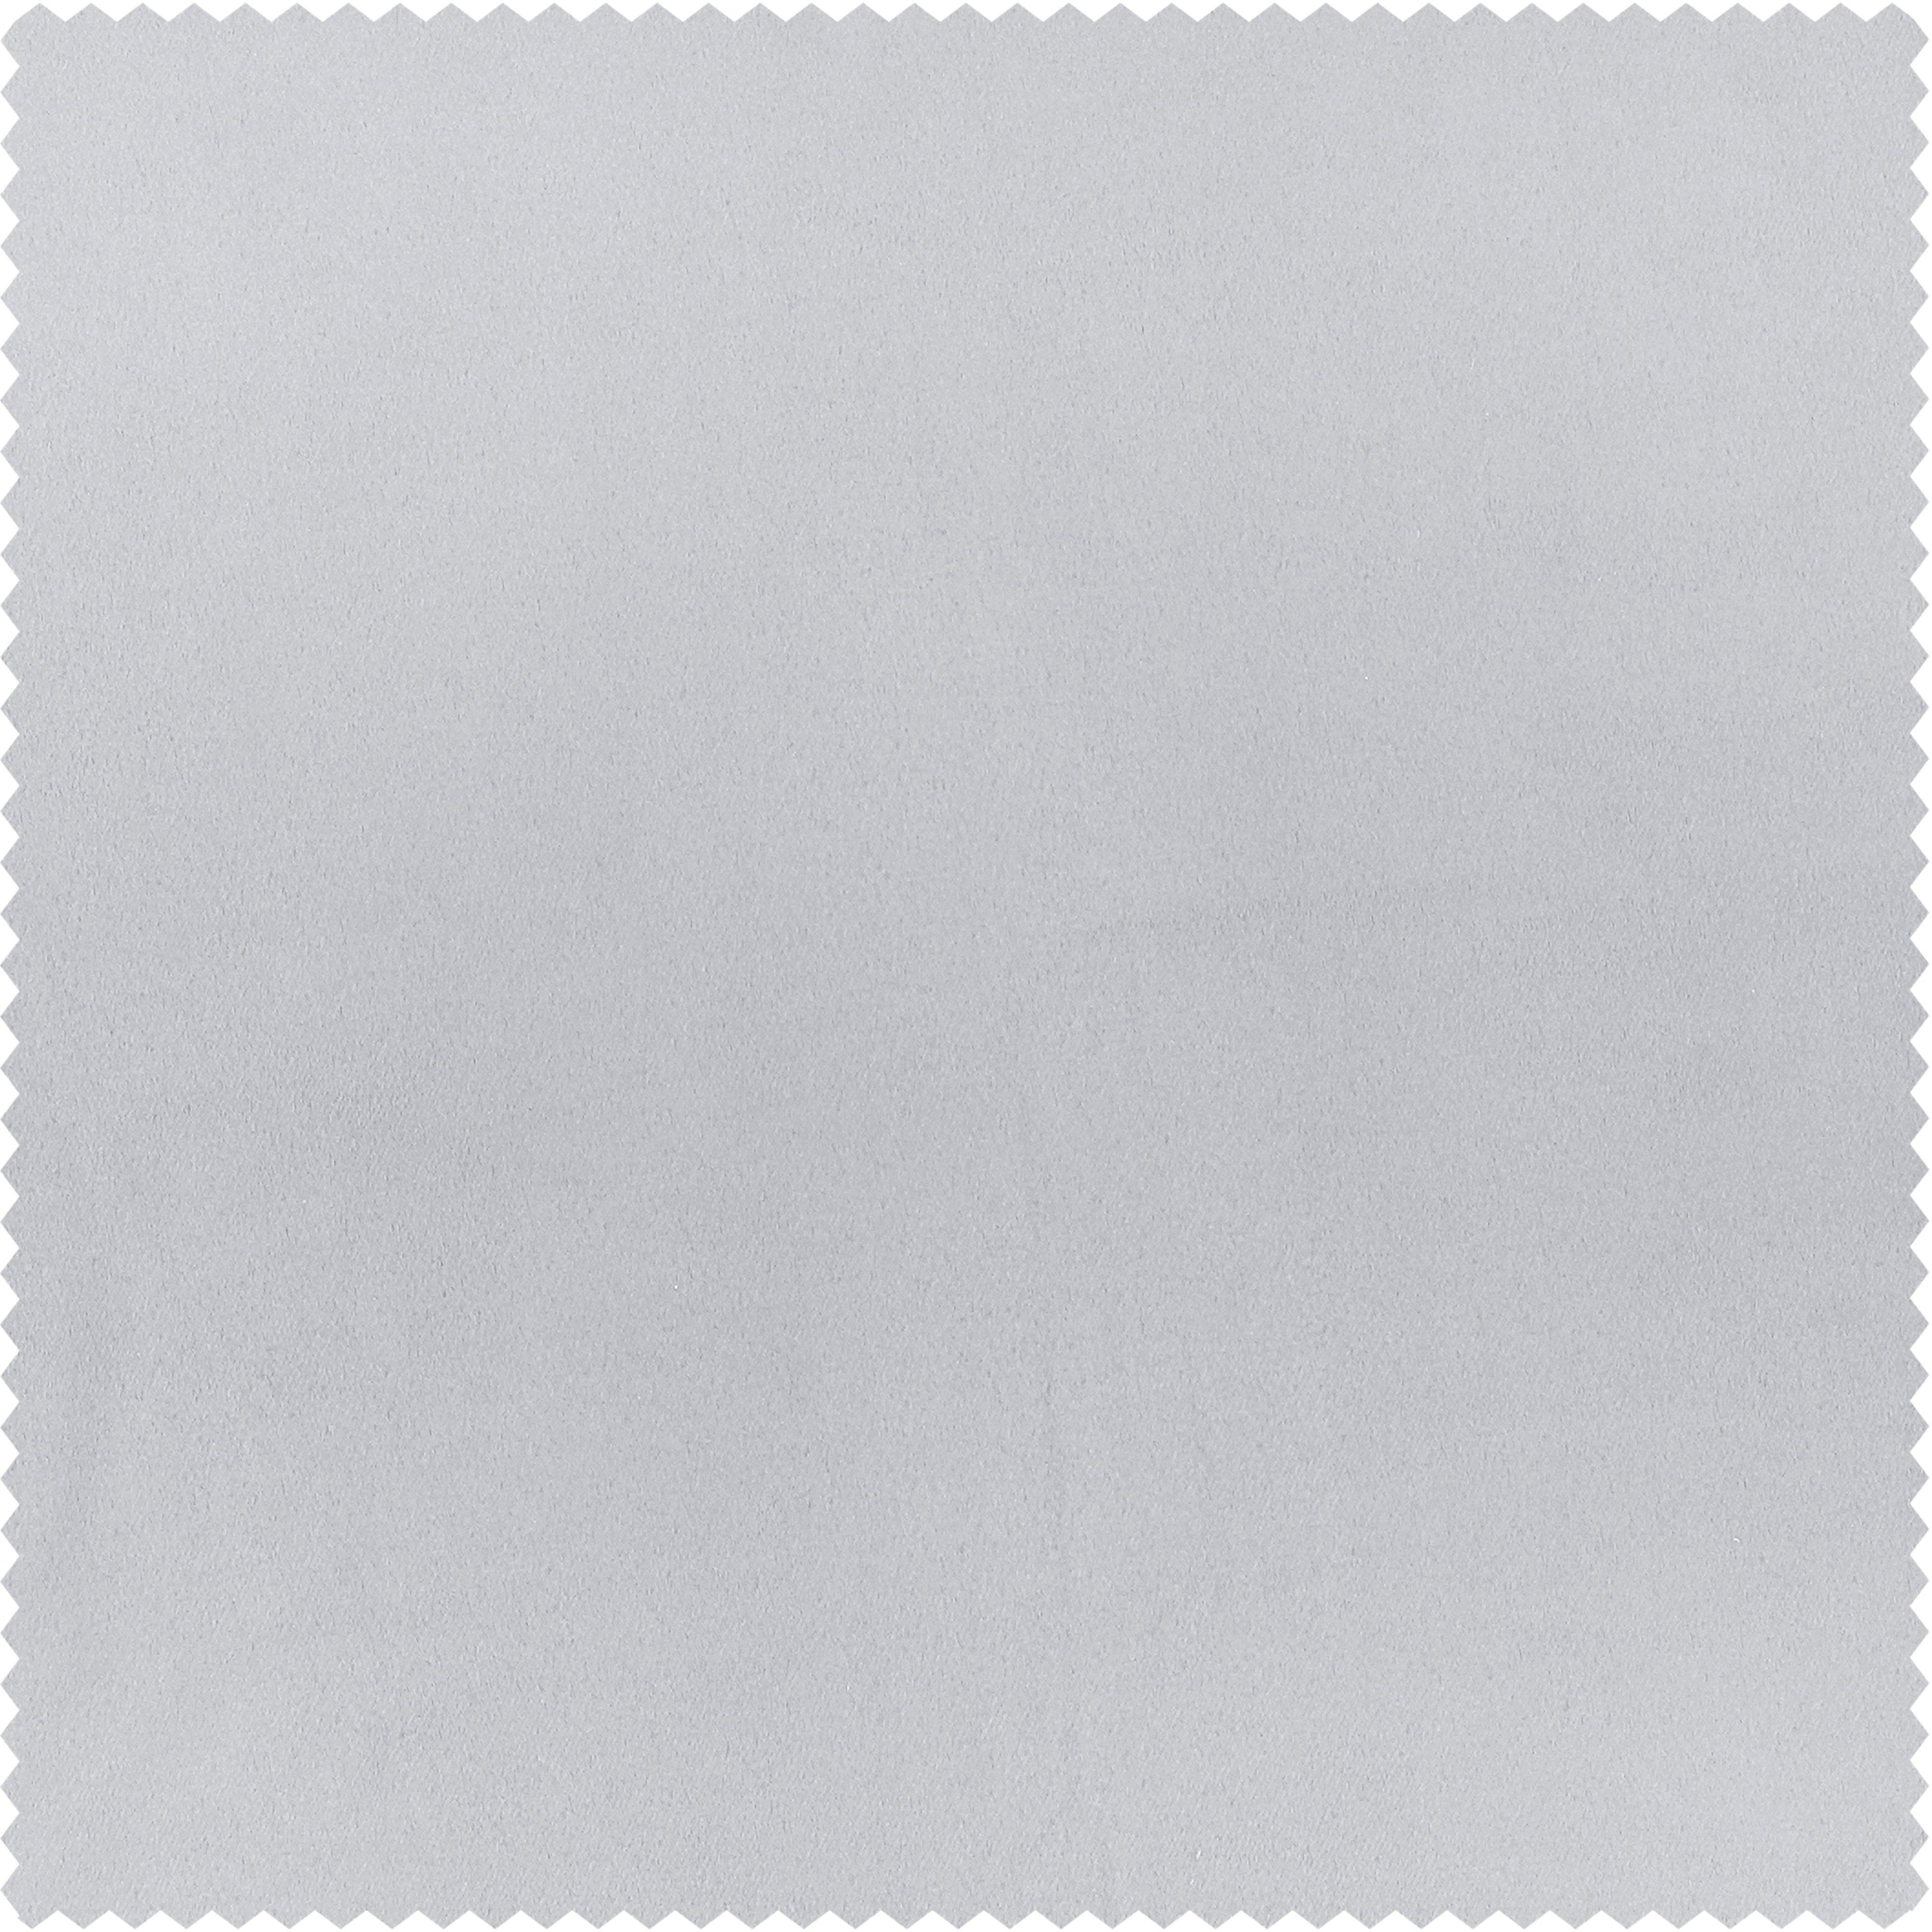 Fog Grey Solid Polyester Swatch